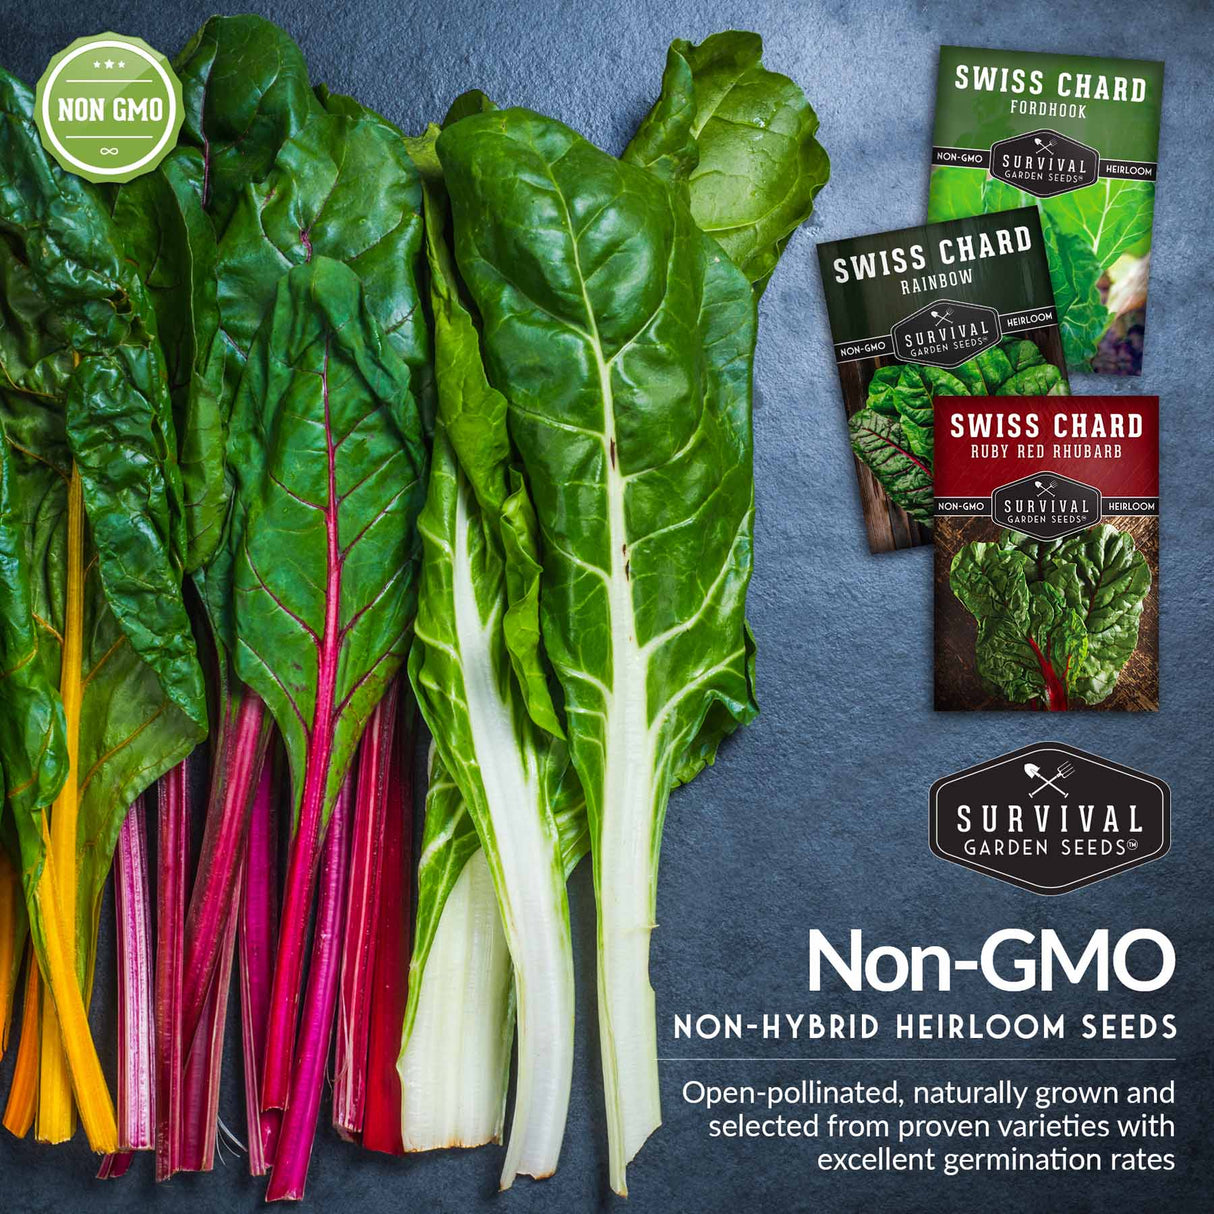 Non-GMO non-hybrid heirloom swiss chard vegetable seeds